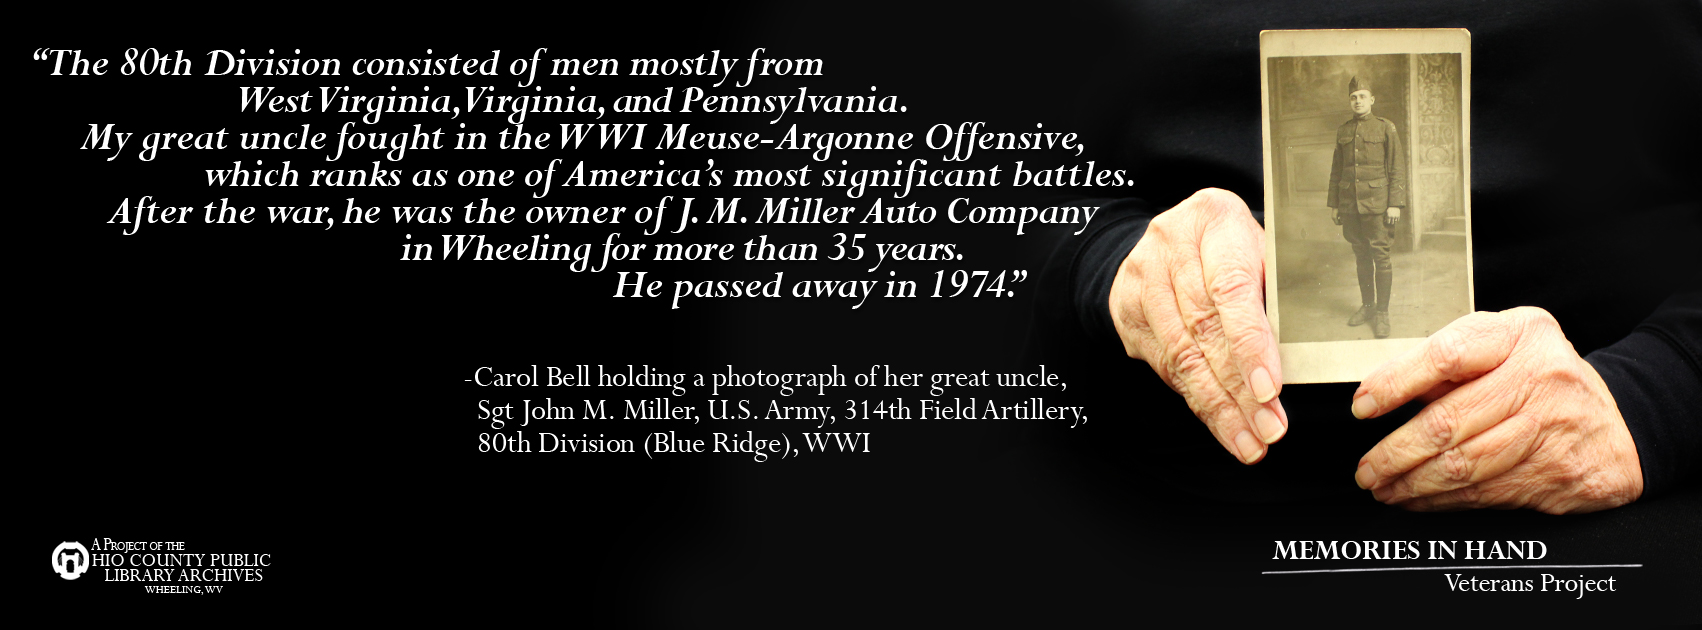 Sgt John M. Miller, U.S. Army, 314th Field Artillery, 80th Division (Blue Ridge), WWI